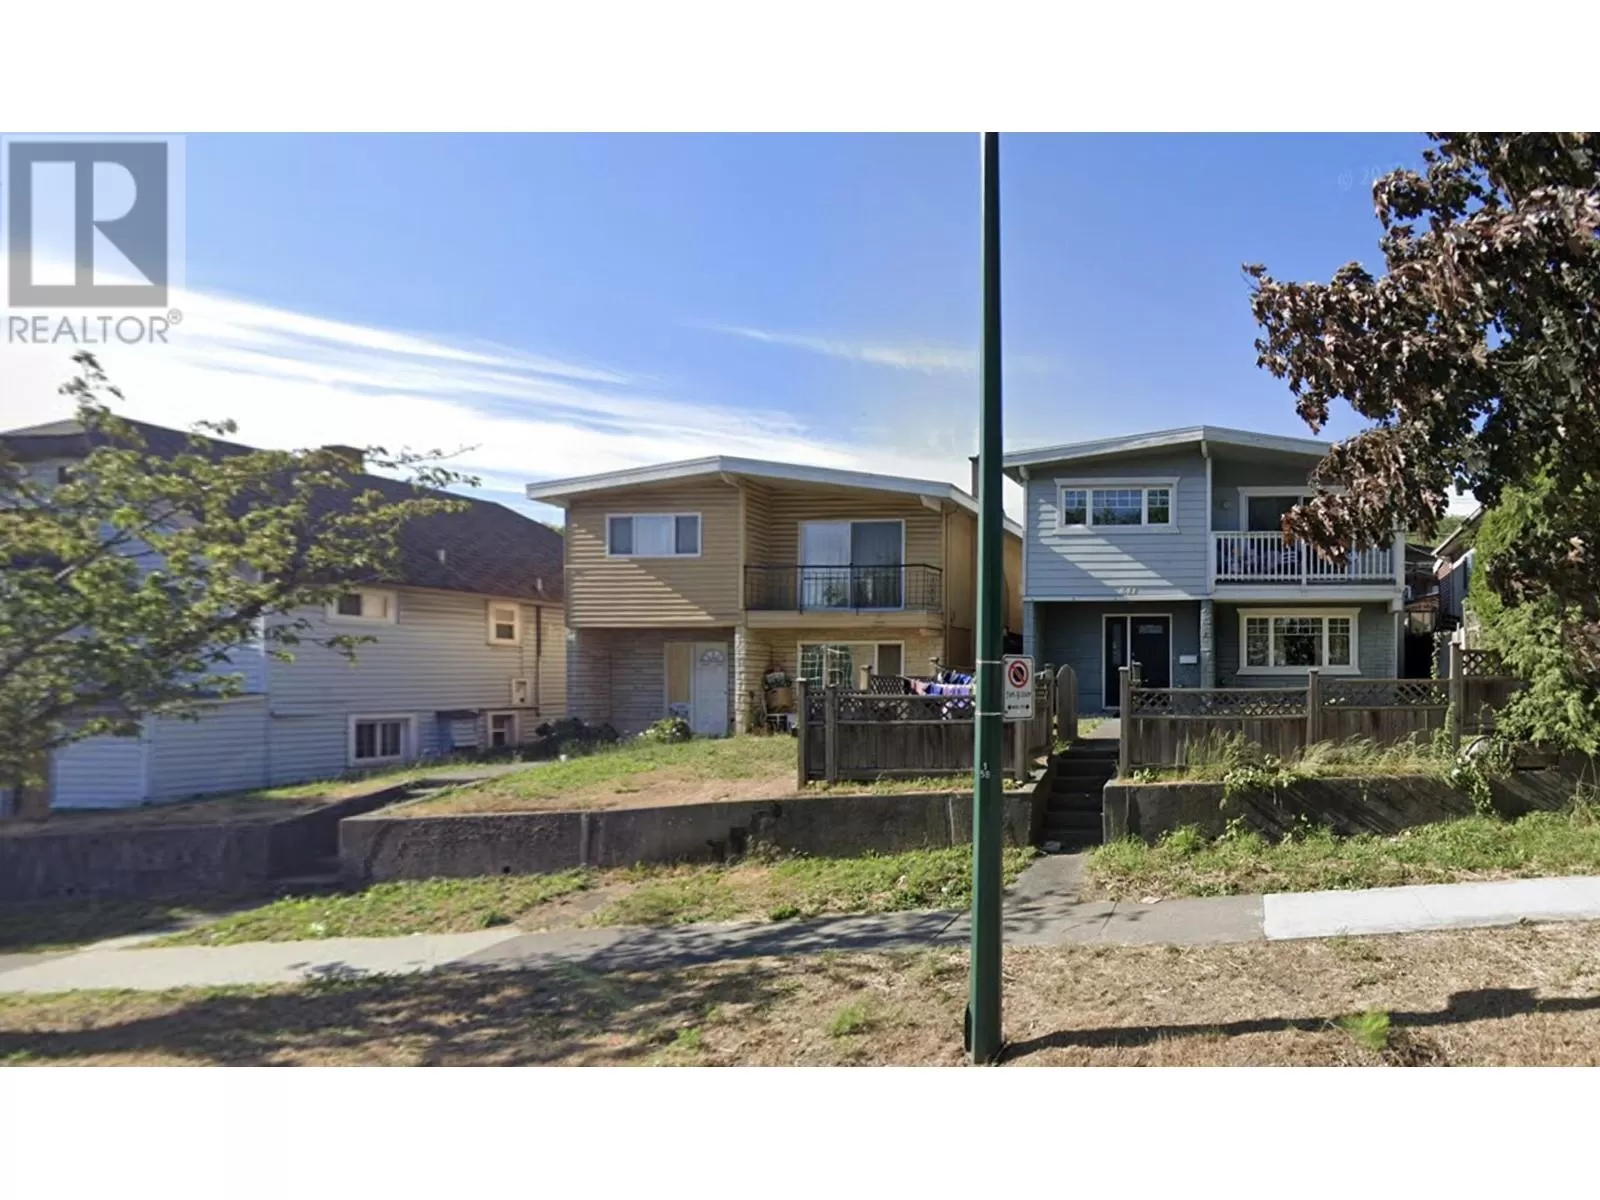 House for rent: 841 Se Marine Drive, Vancouver, British Columbia V5X 2V2